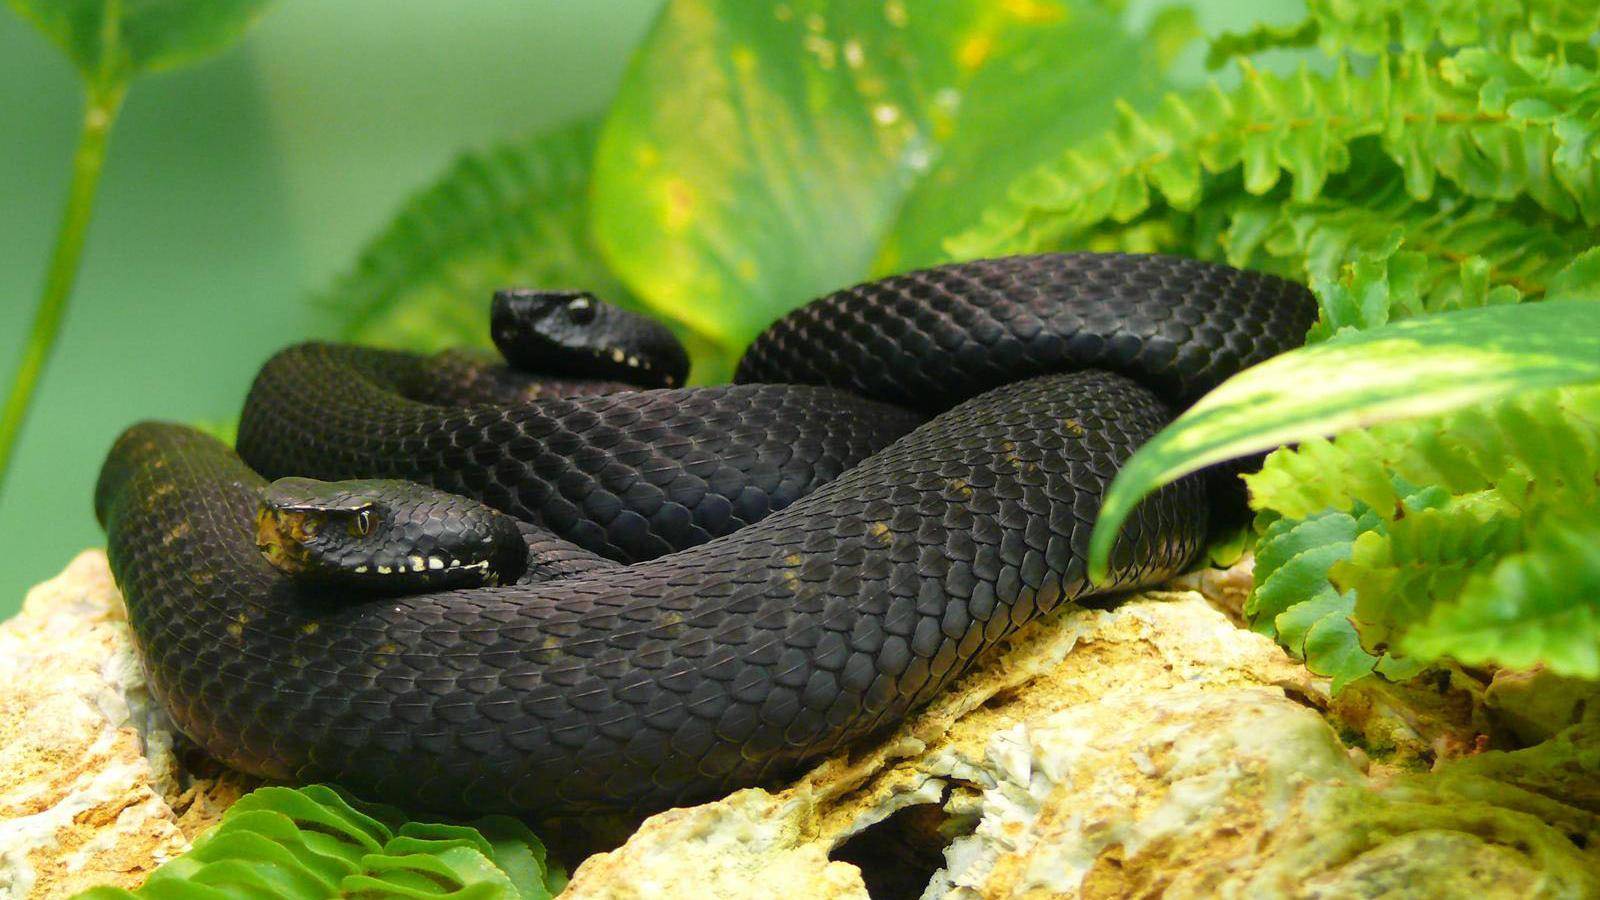 Young black snake image